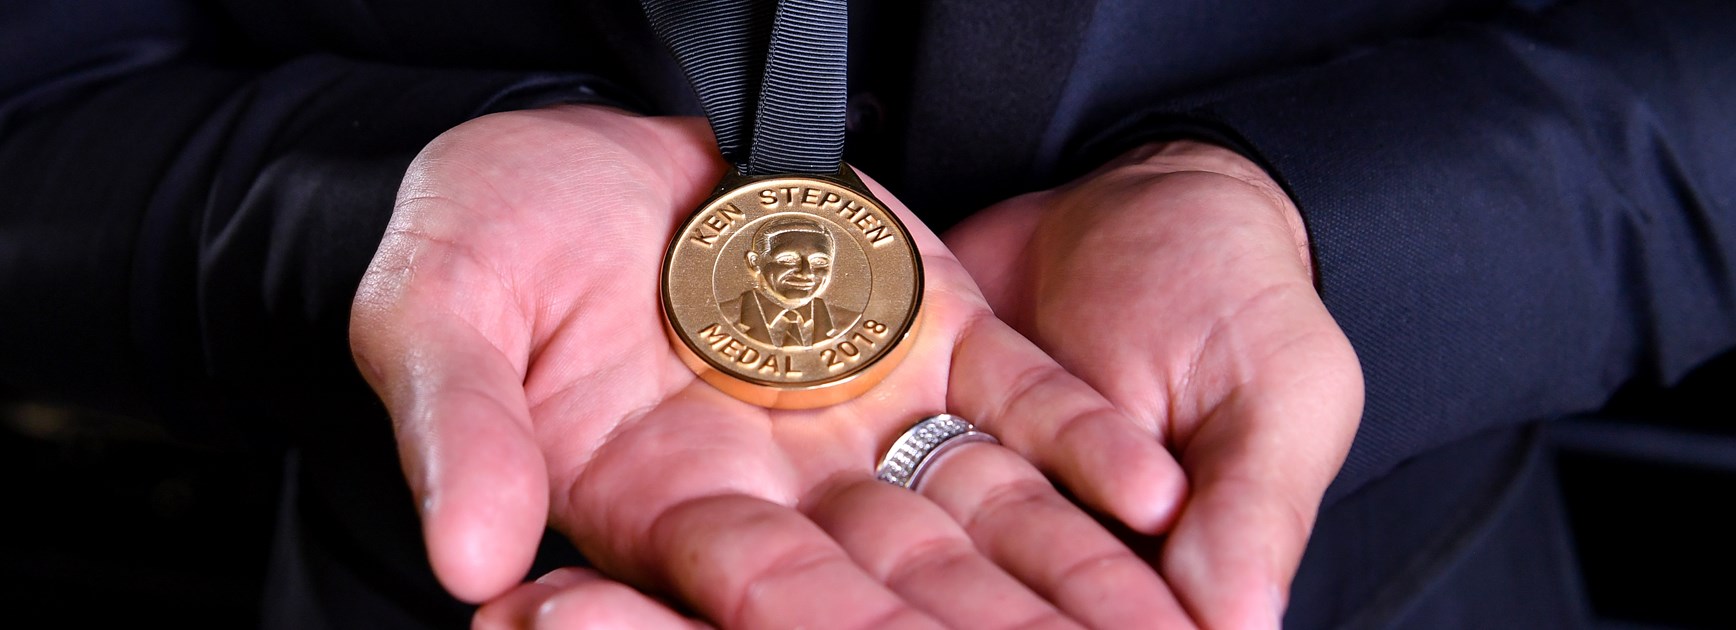 Profiling the 2019 Ken Stephen Medal nominees